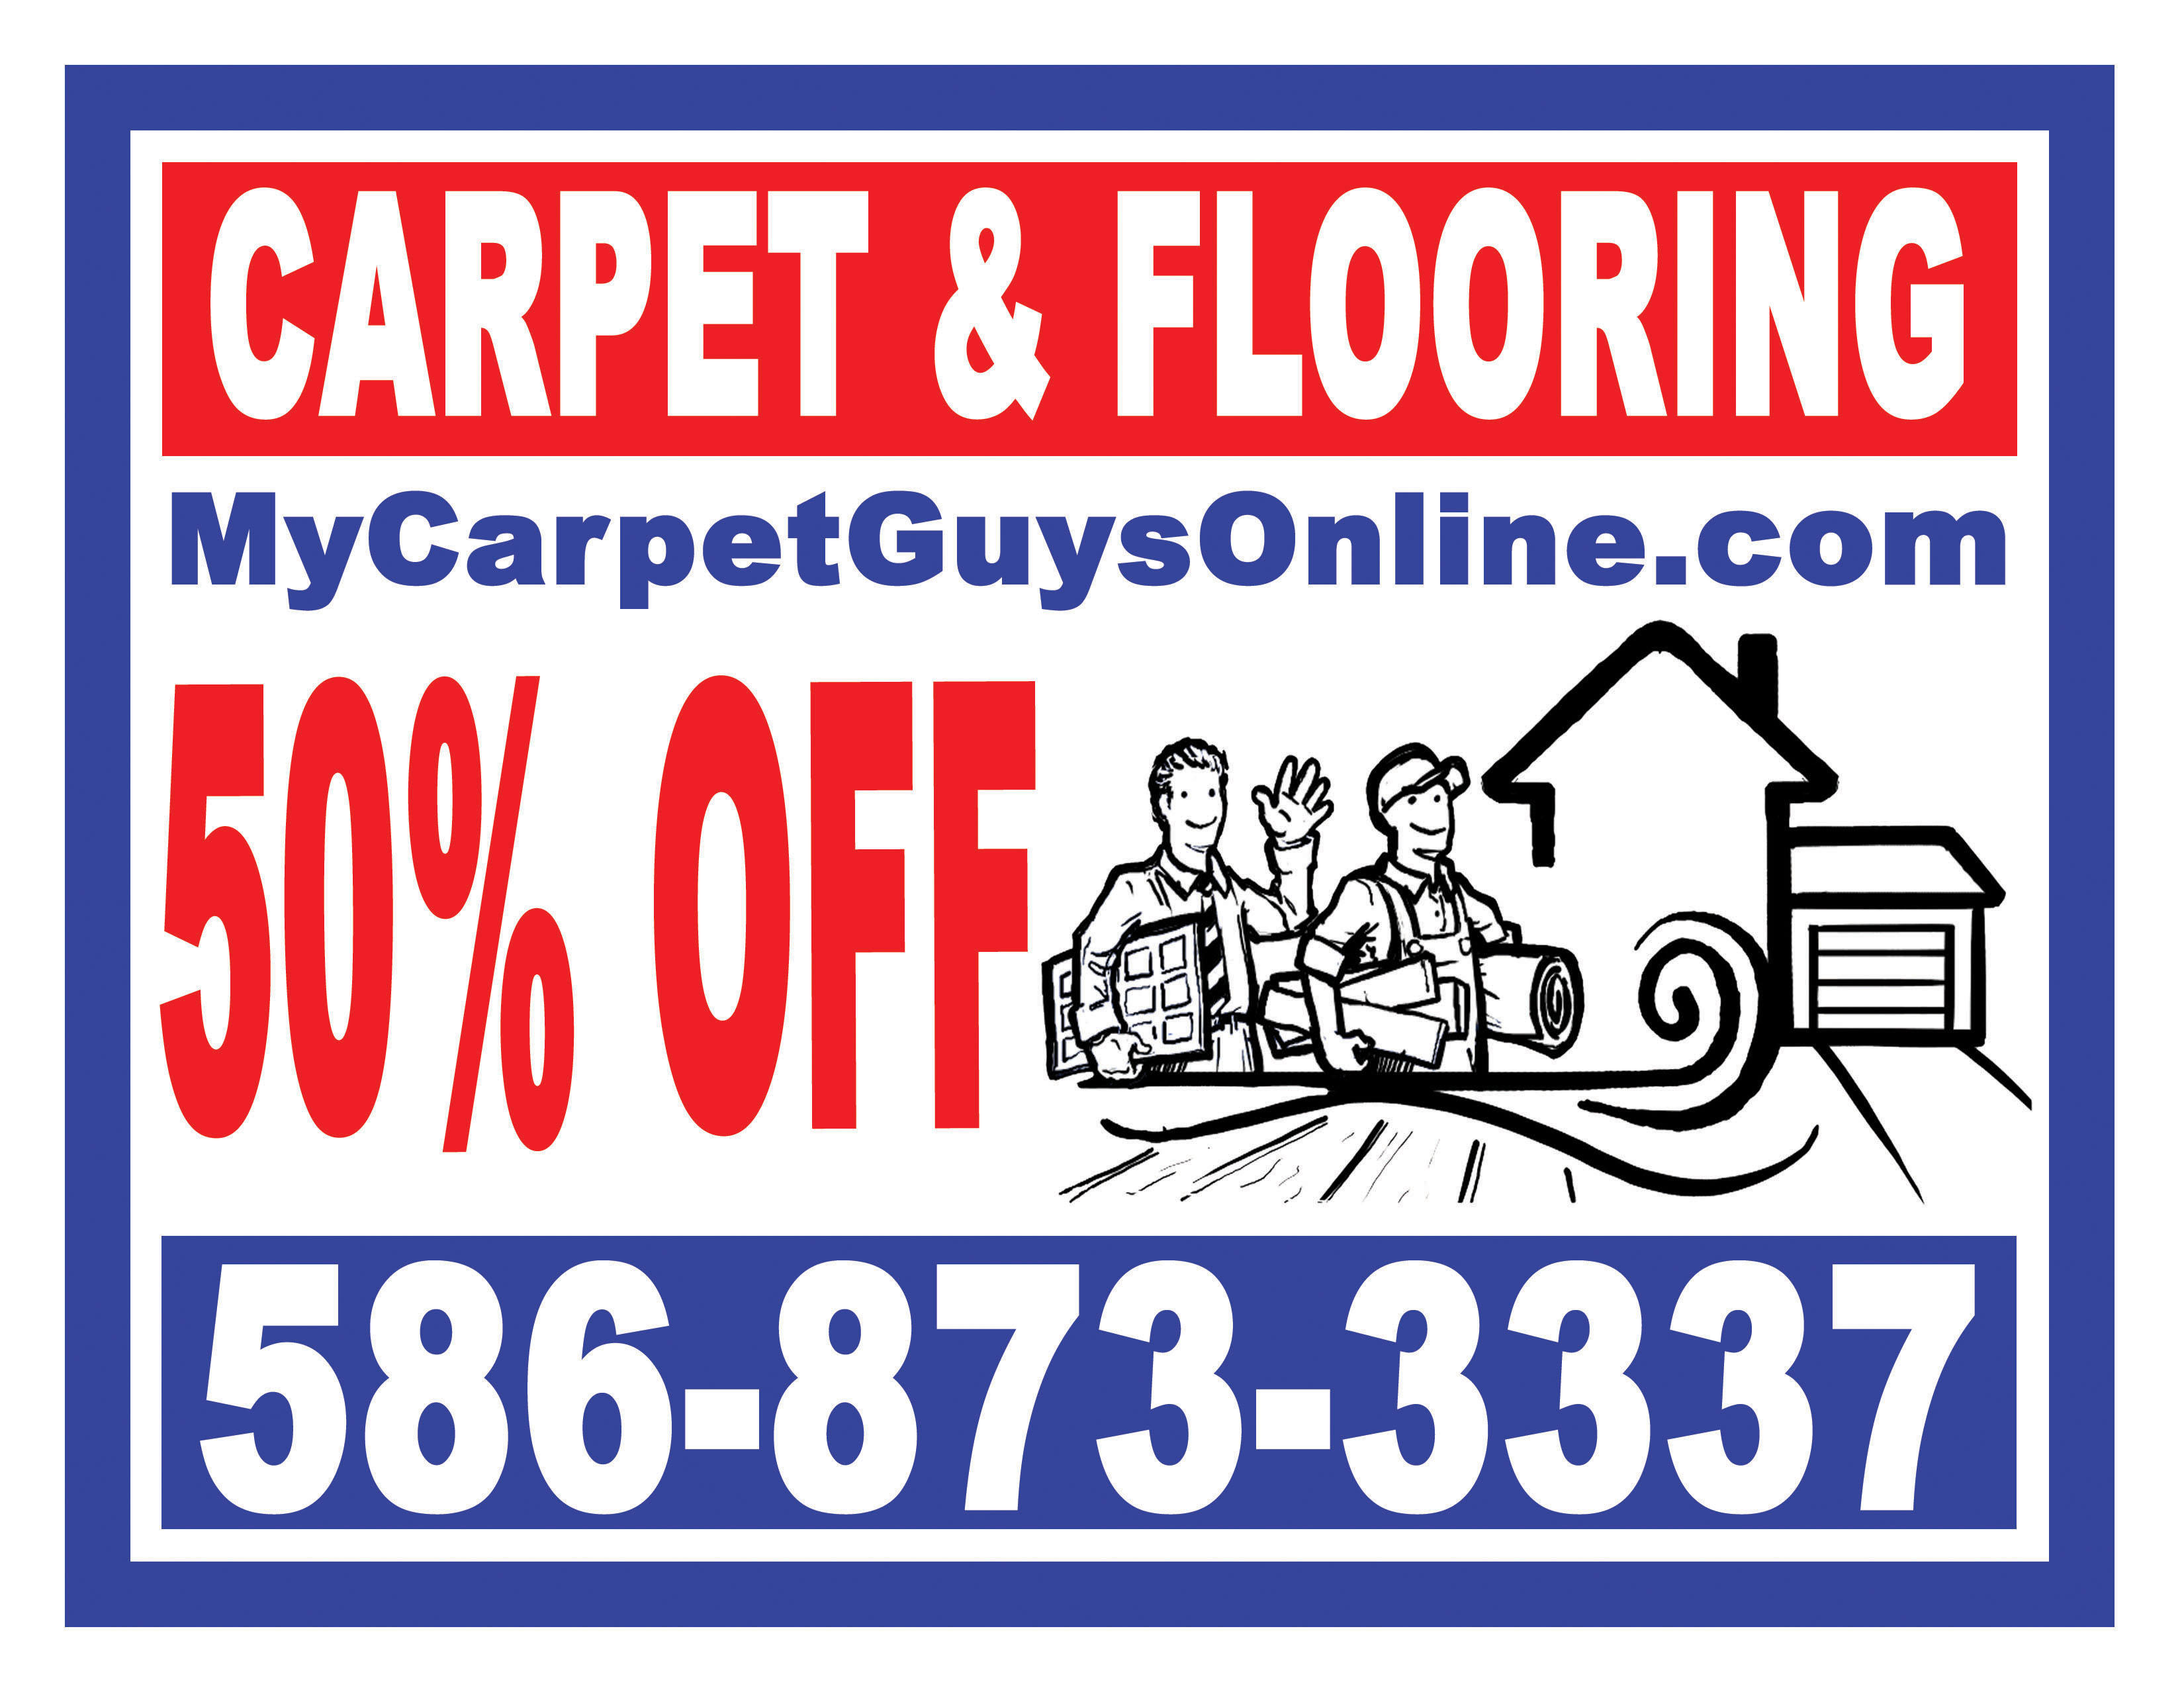 The Carpet Guys, LLC Logo